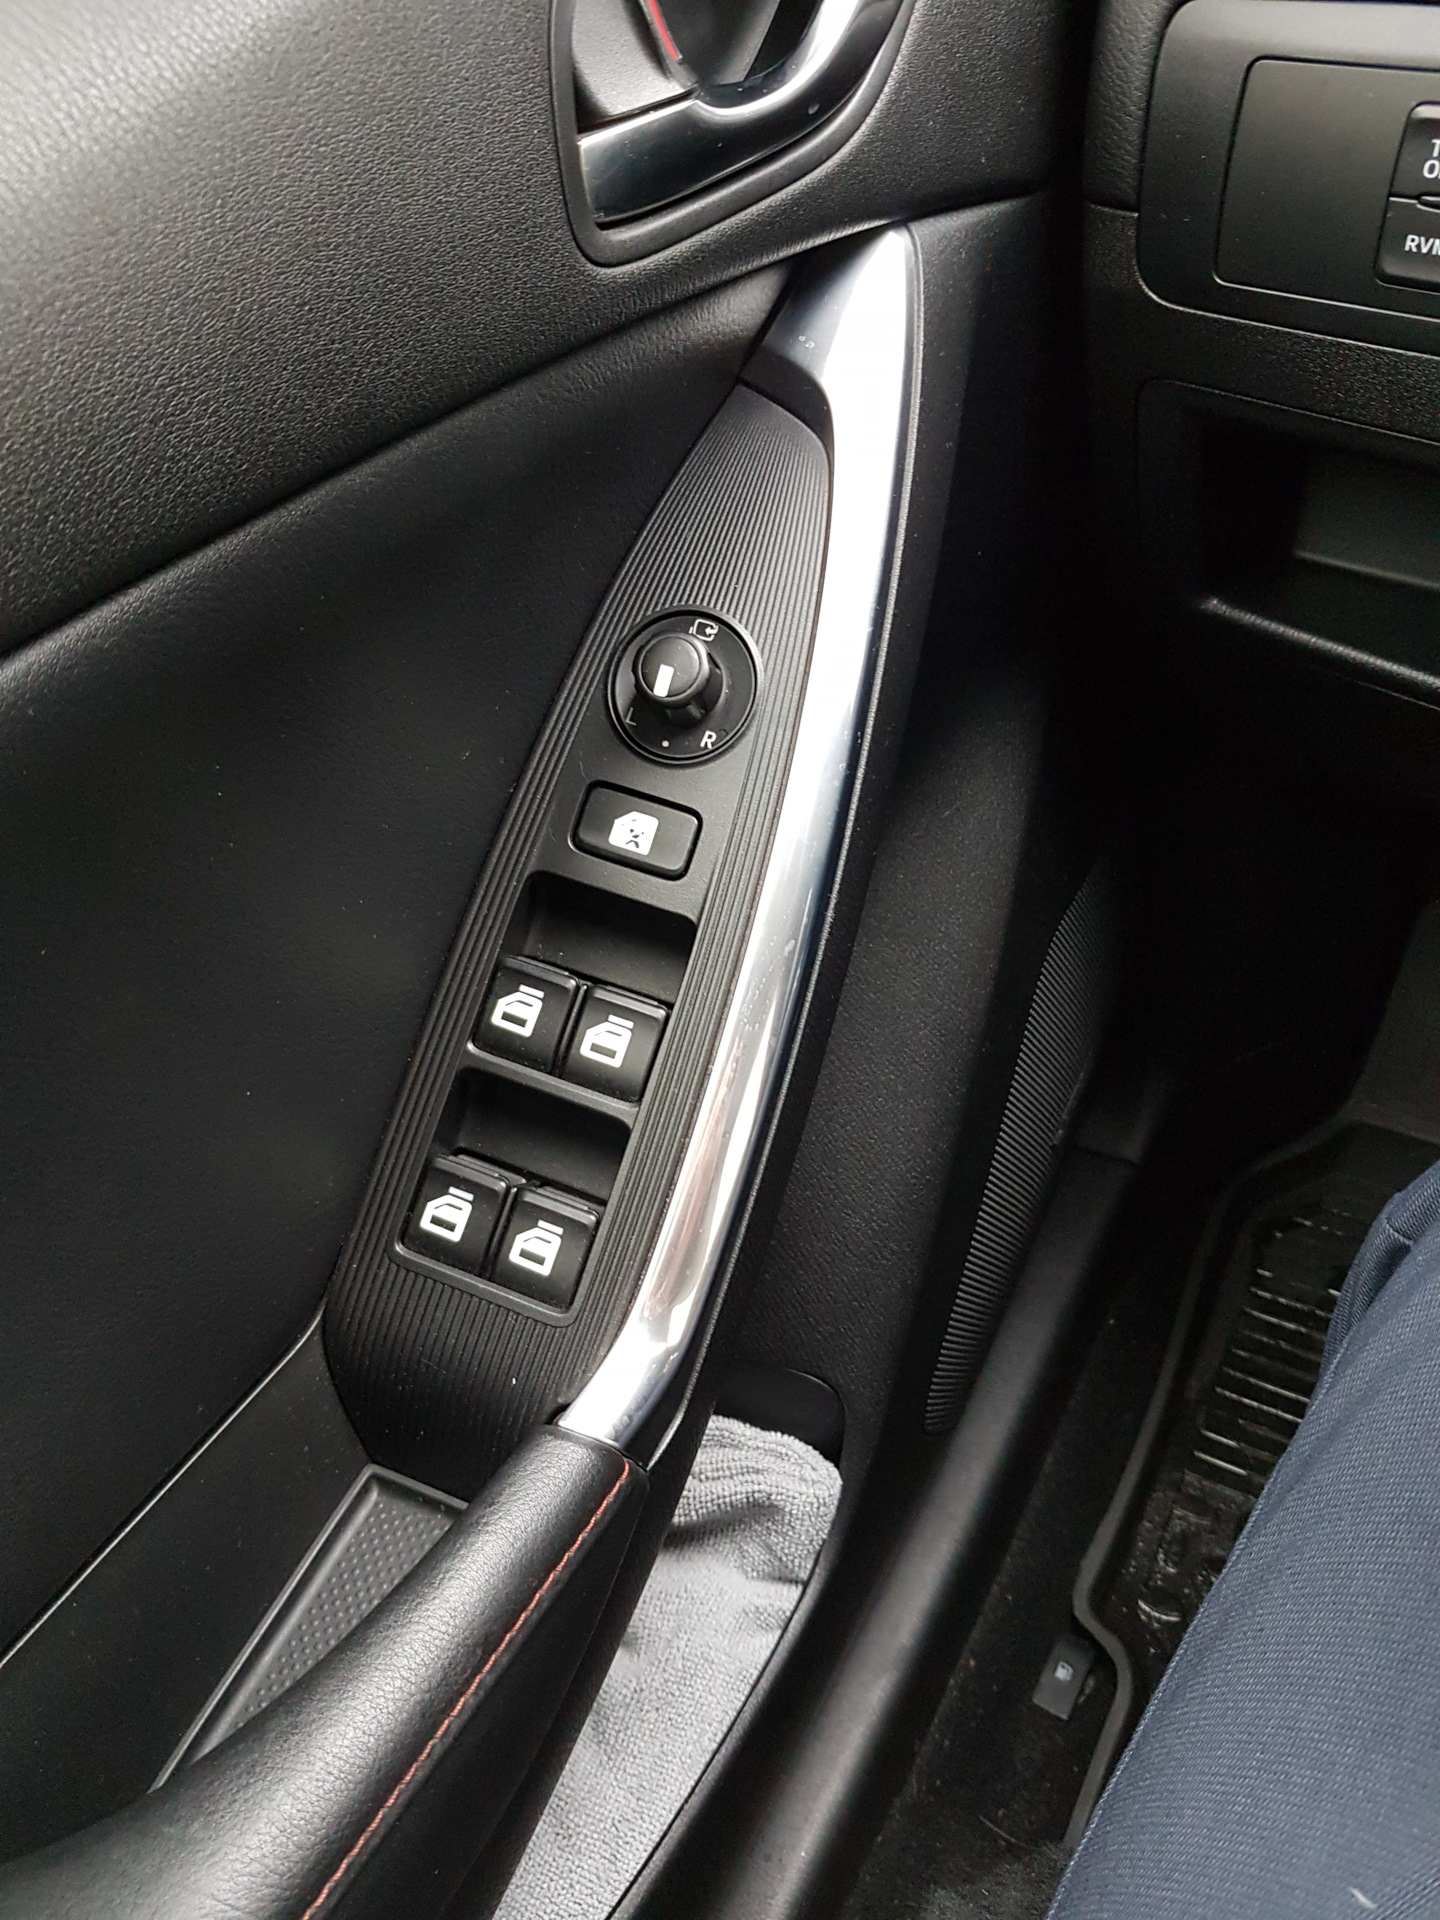 Складывание зеркал мазда сх 5. Кнопки стеклоподъёмников Mazda CX-5 2021. Кнопка складывания зеркал Мазда 6. Mazda cx5 2013 блок управления стеклоподъемниками. Мазда СХ 5 складывание зеркал.